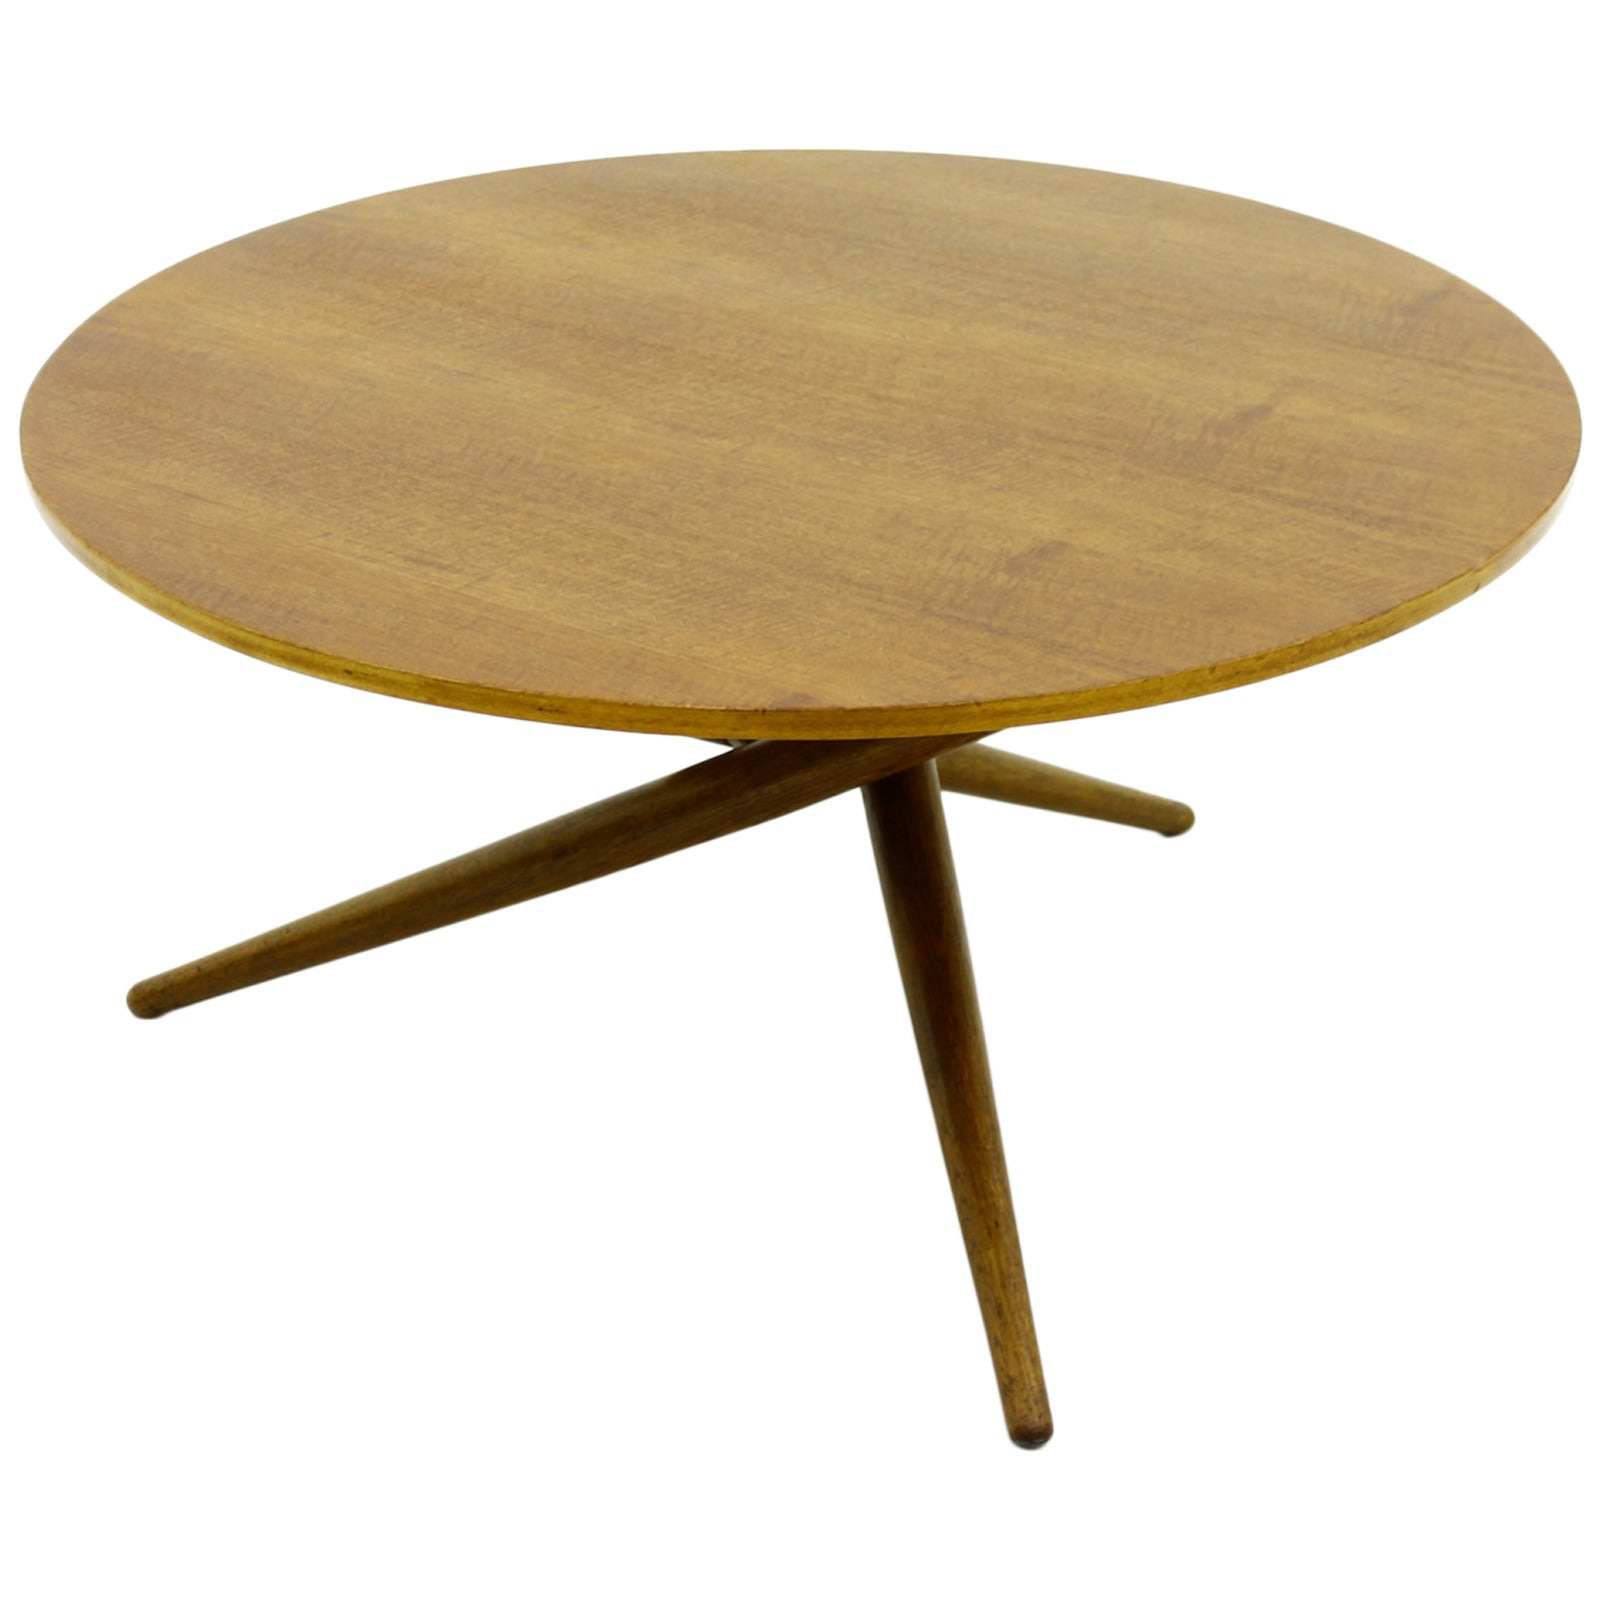 Adjustable Table by Jürg Bally, Switzerland 1951